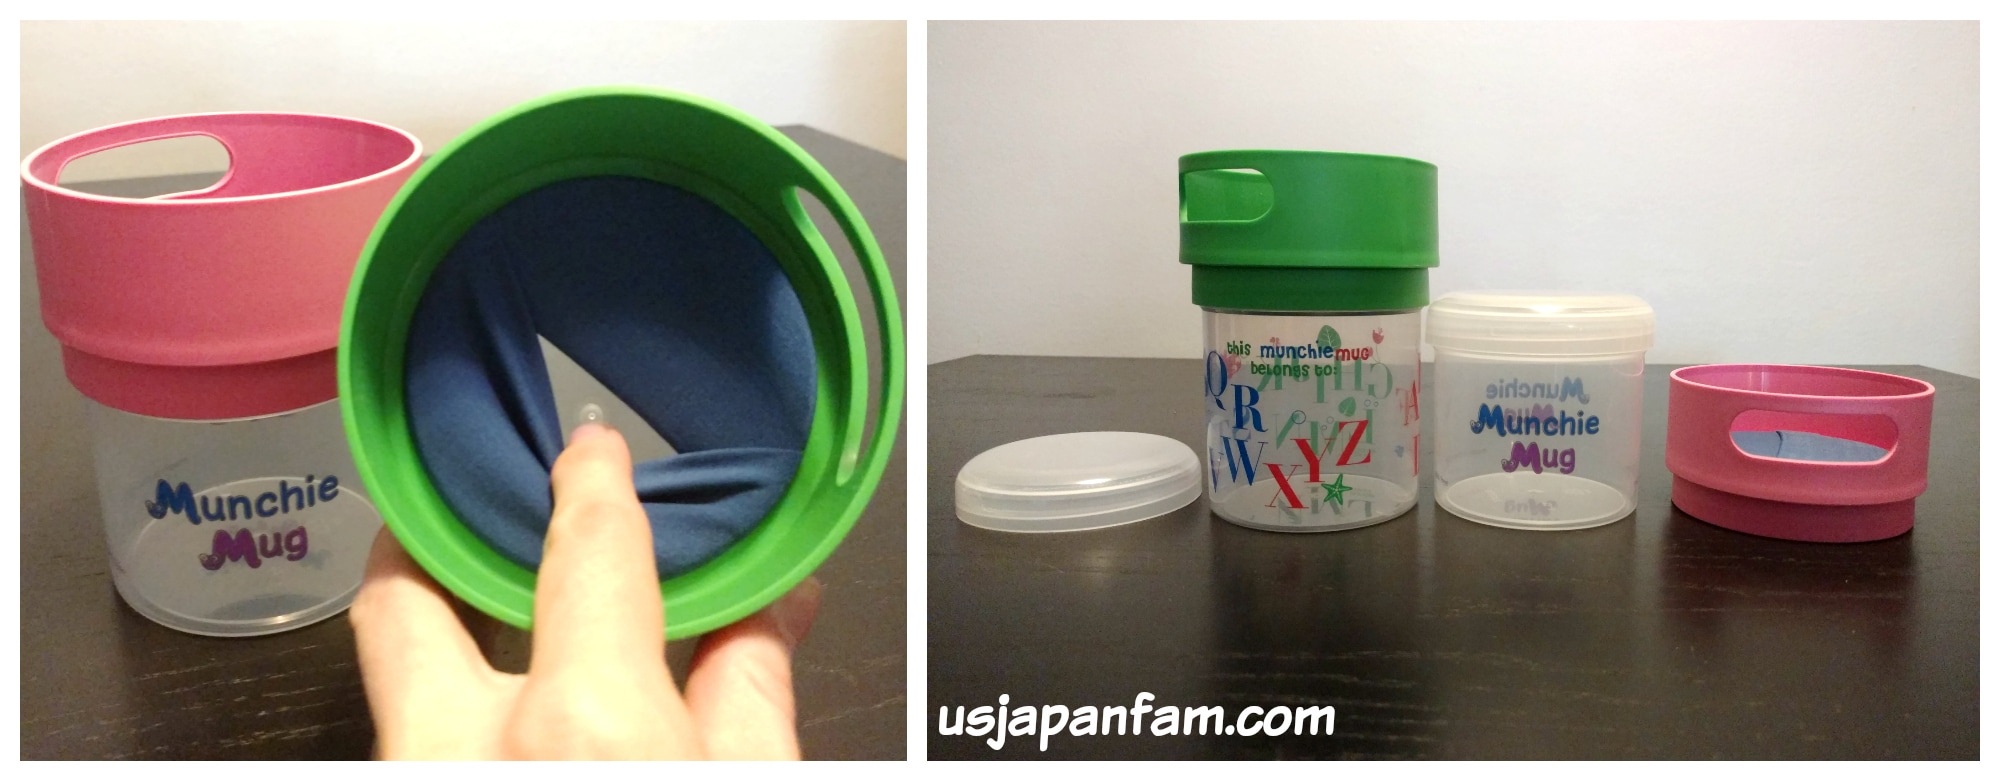 US Japan Fam loves Munchie Mug spill-proof snack cup!